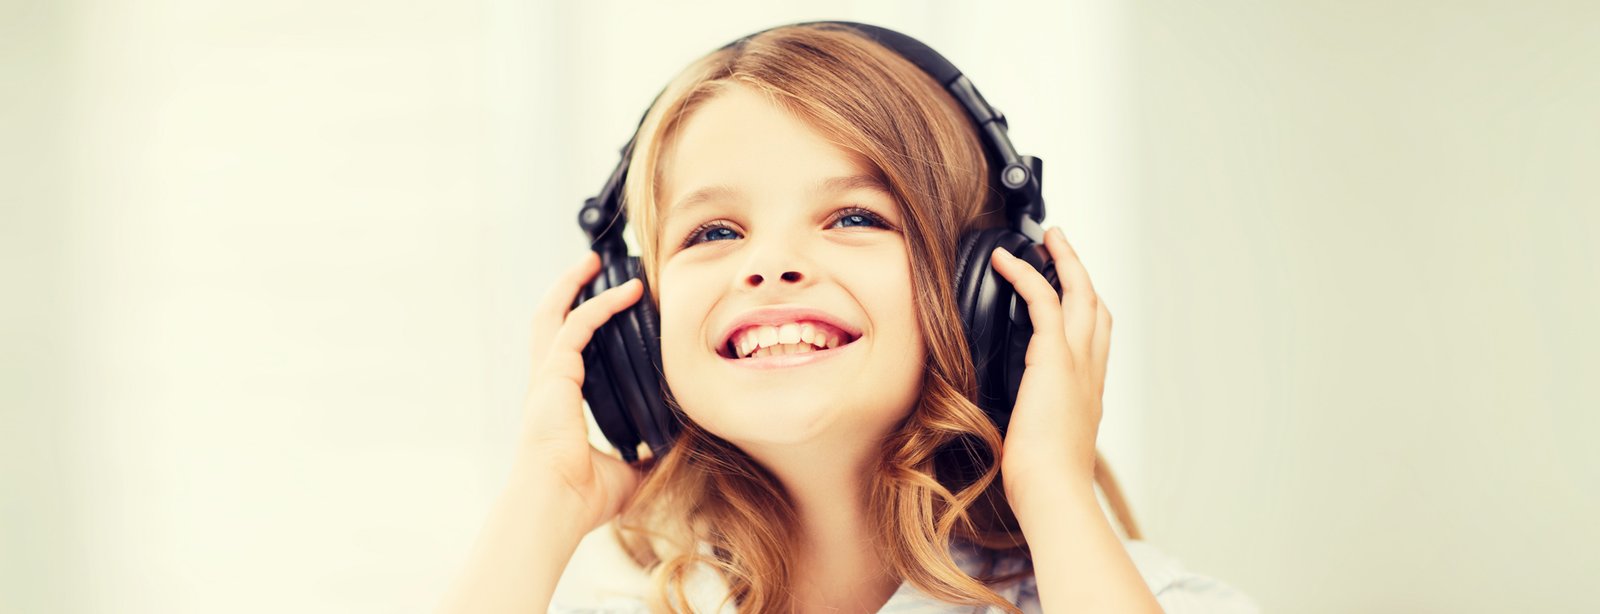 Девочка слушает музыку